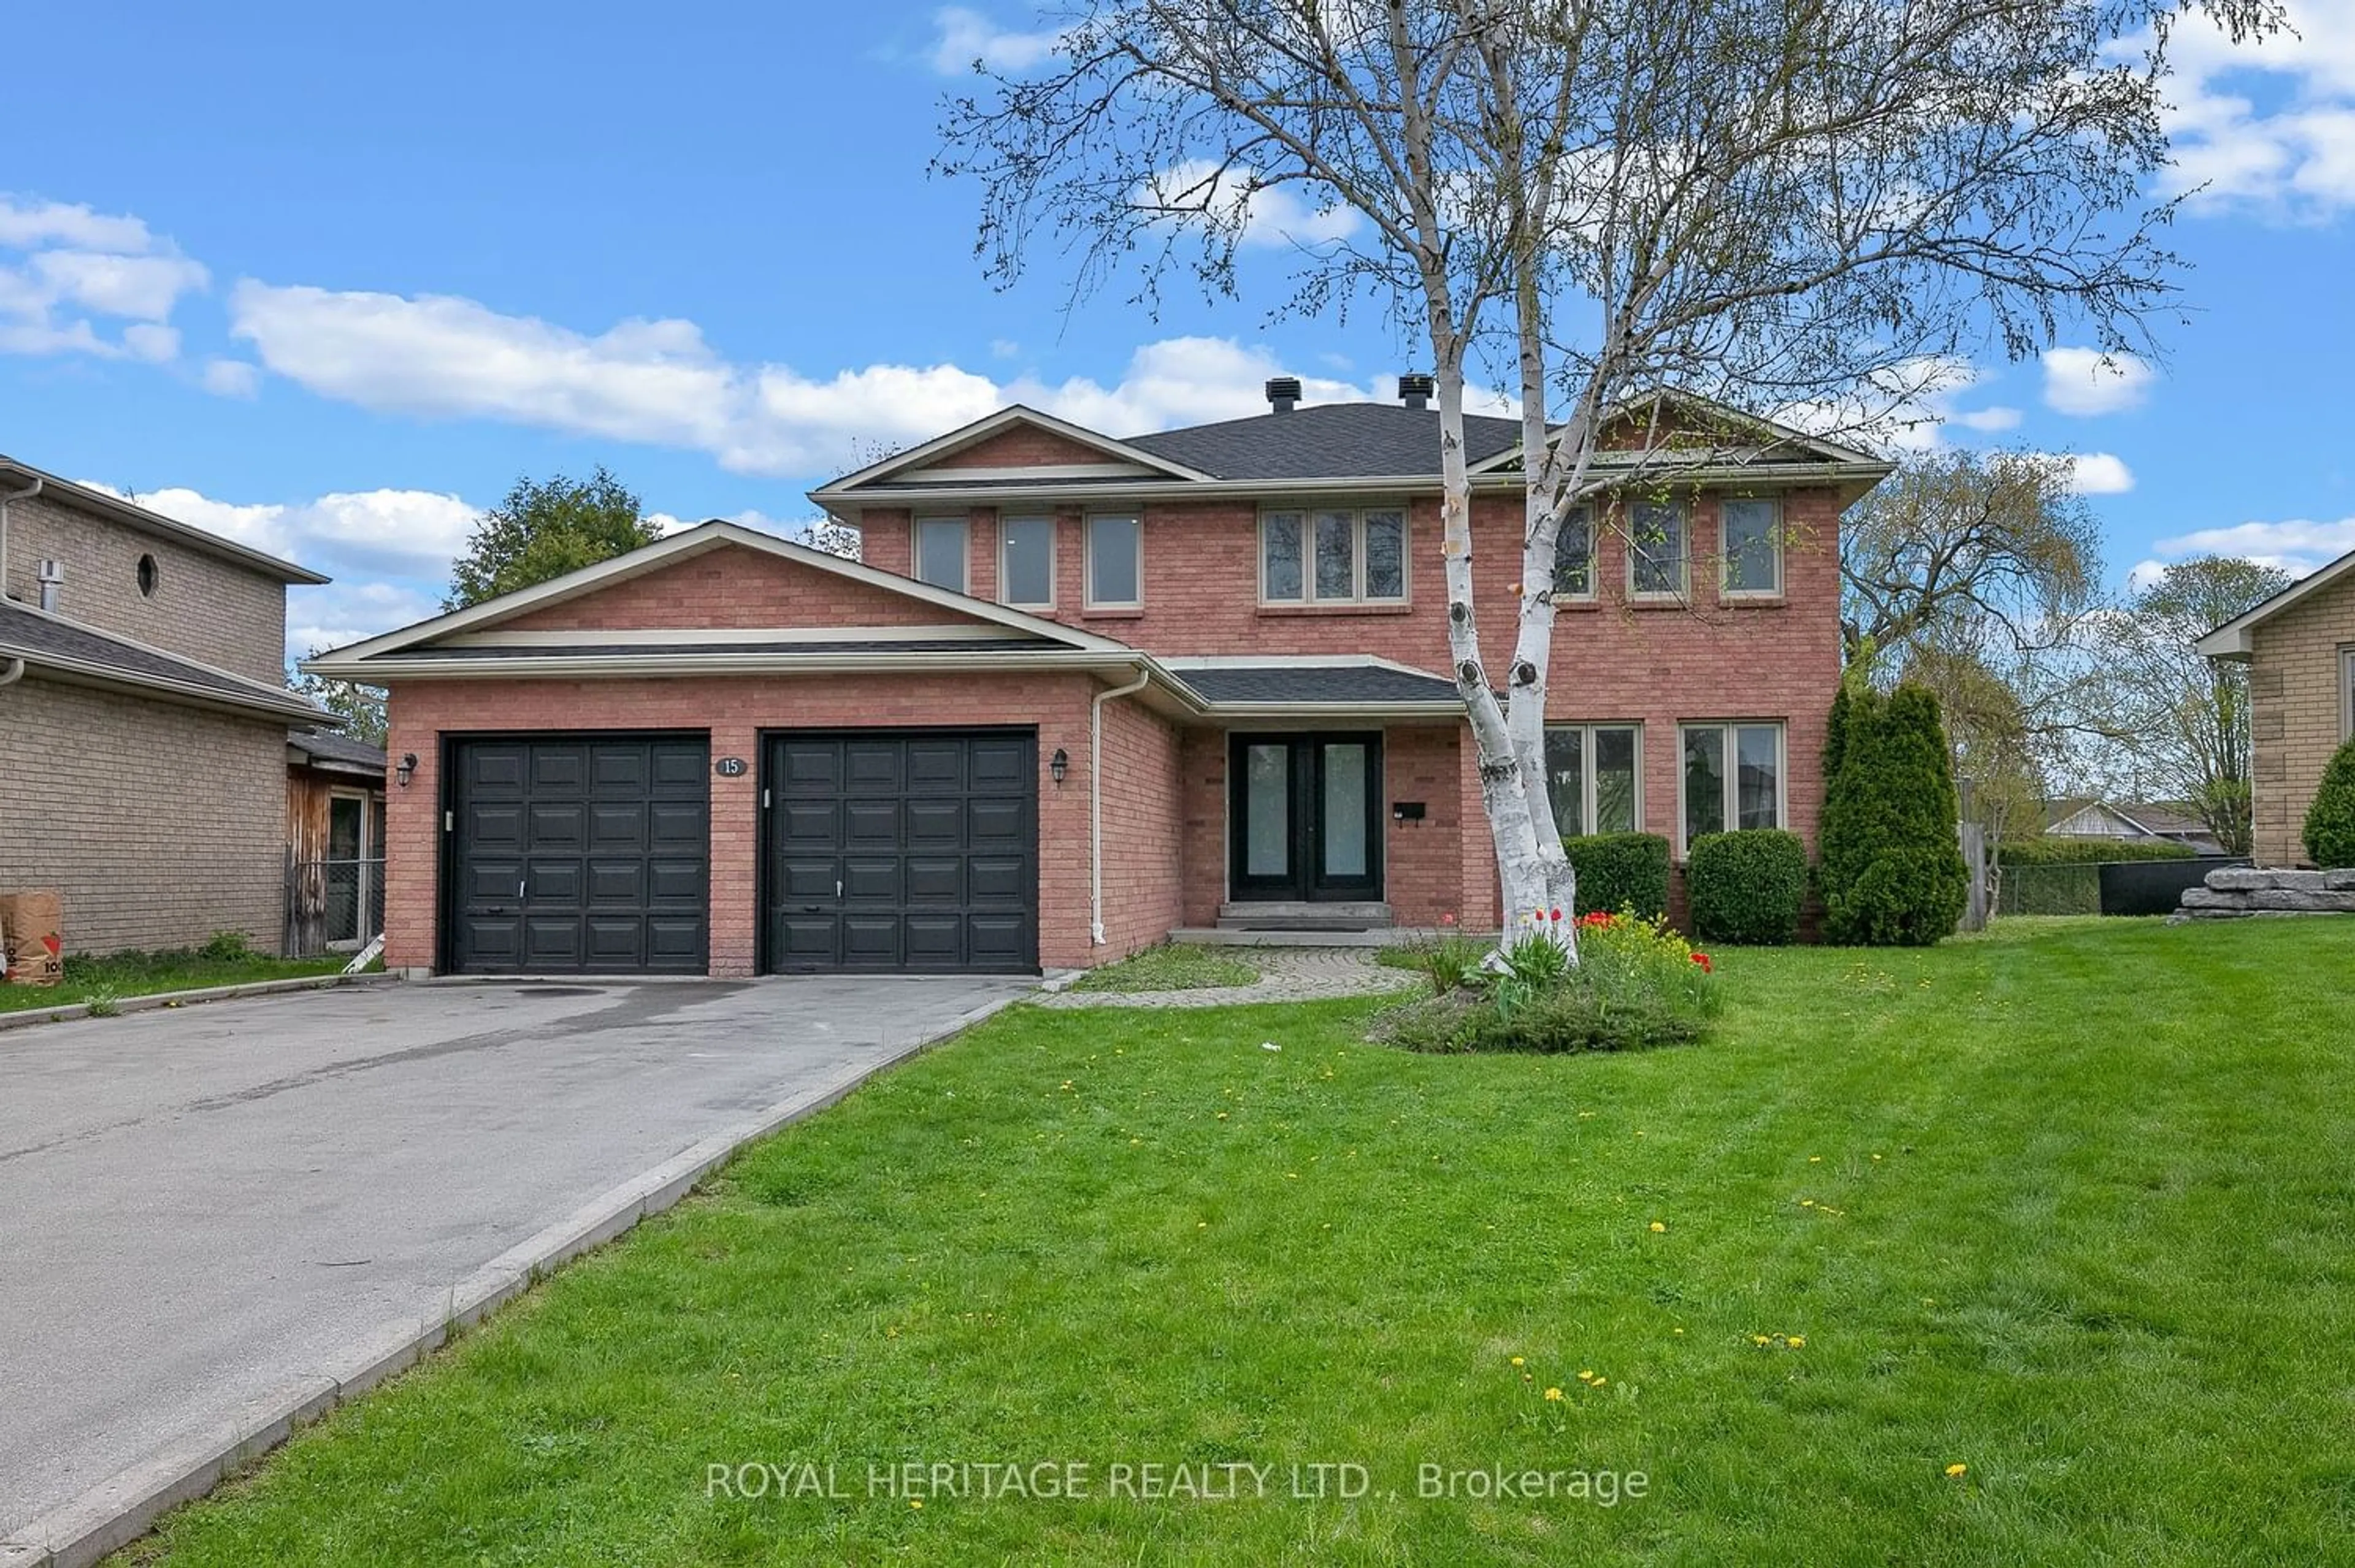 Home with brick exterior material for 15 Dunsford Crt, Kawartha Lakes Ontario K9V 5T3